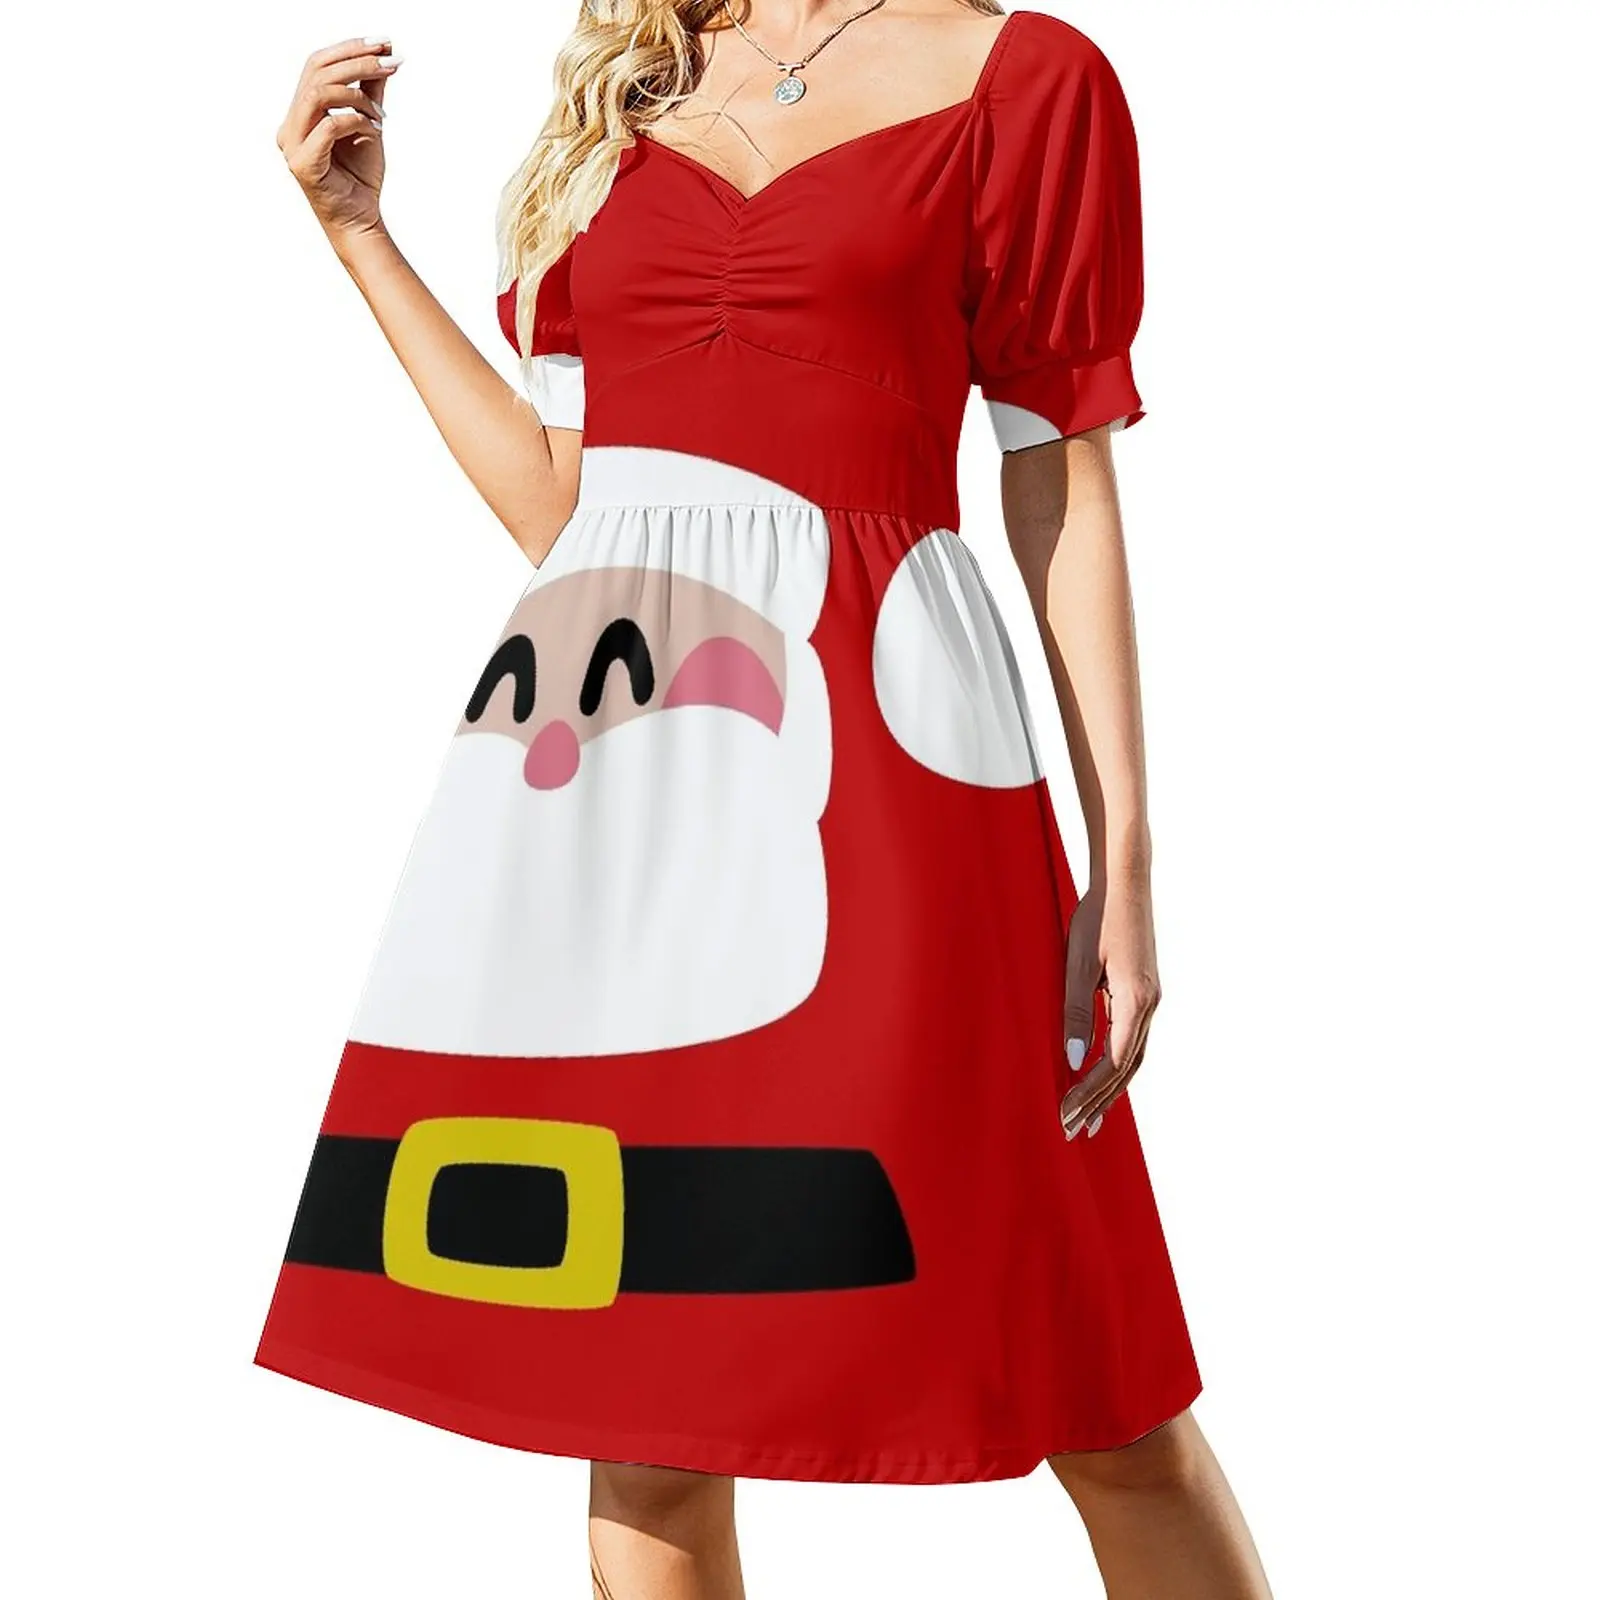 Merry Christmas Santa Claus Sleeveless Dress Women's